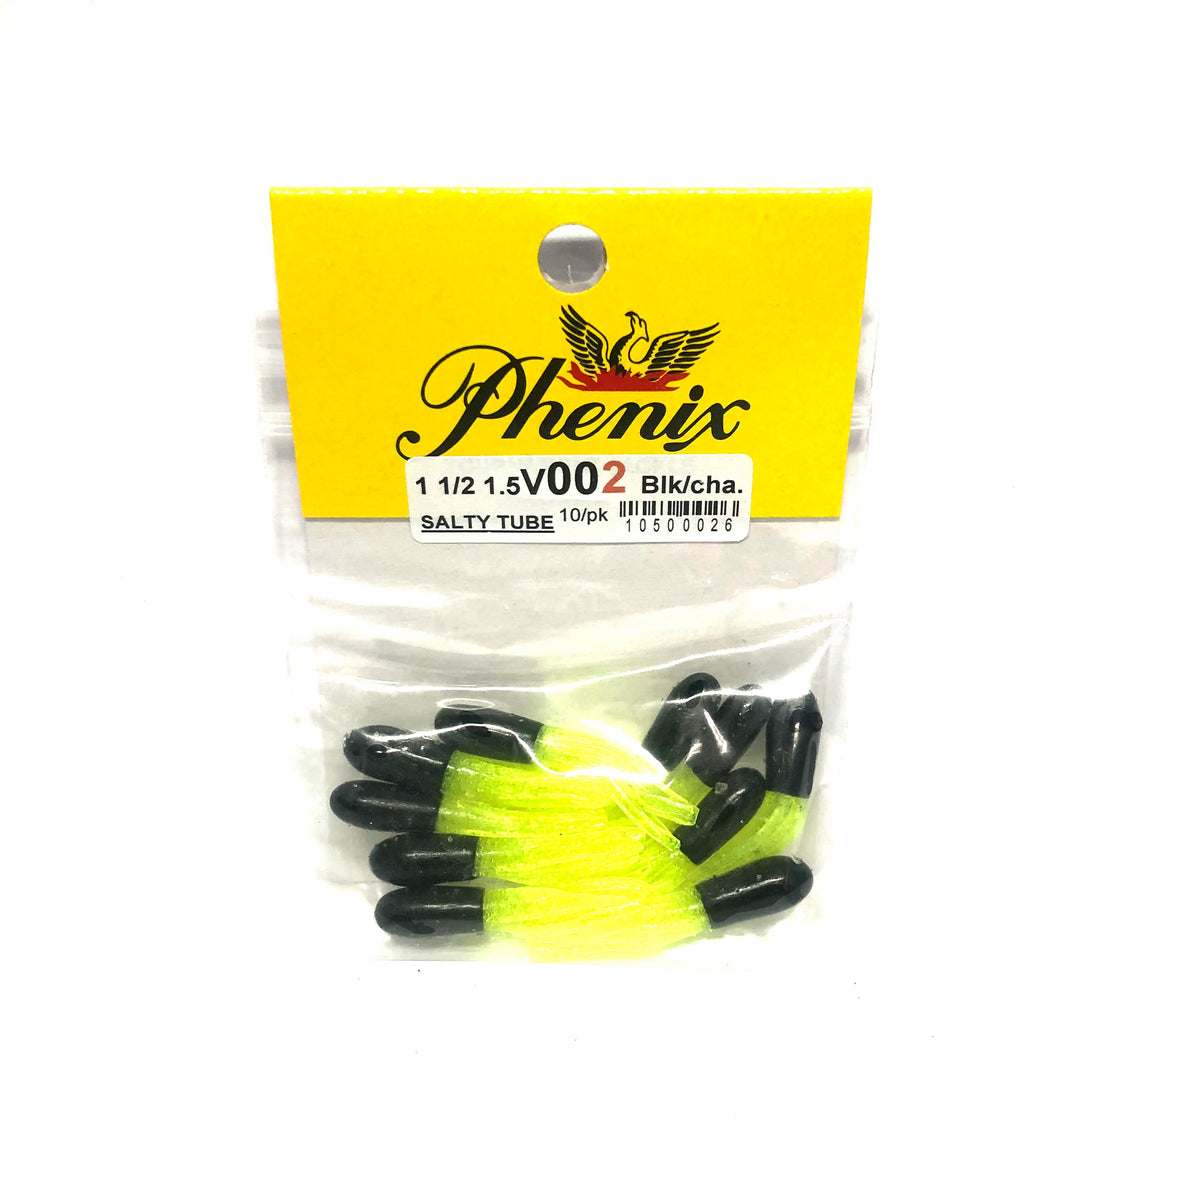 Phenix Salty Tube 1.5 Panfish Tube – Natural Sports - The Fishing Store